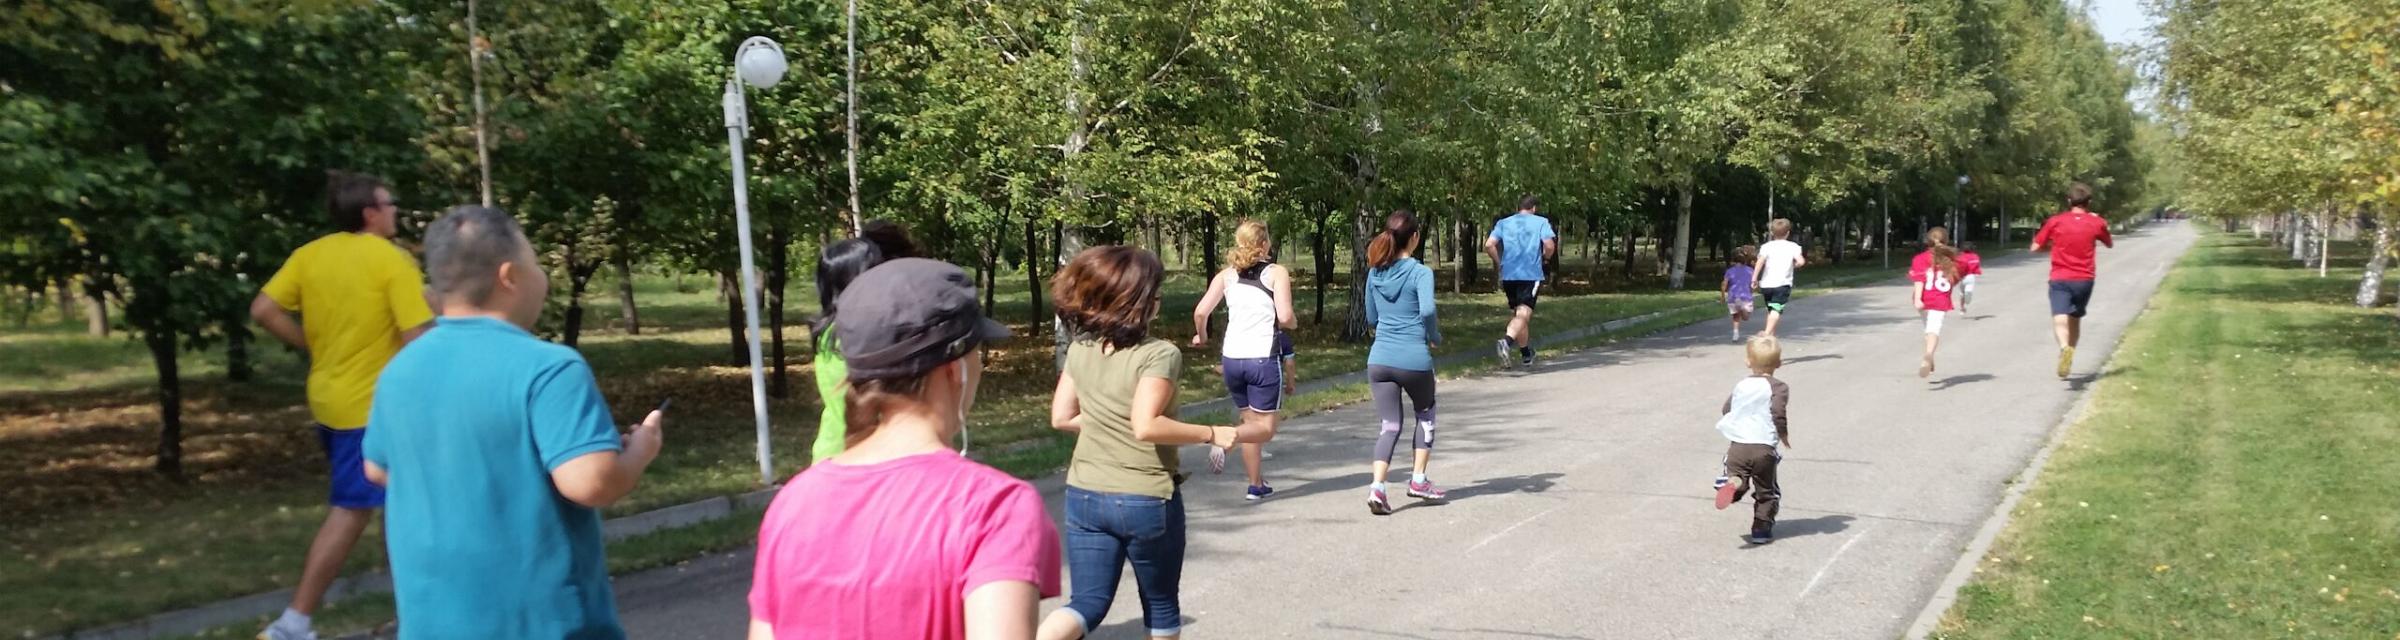 A dozen people of various ages run through a Central Asian park.